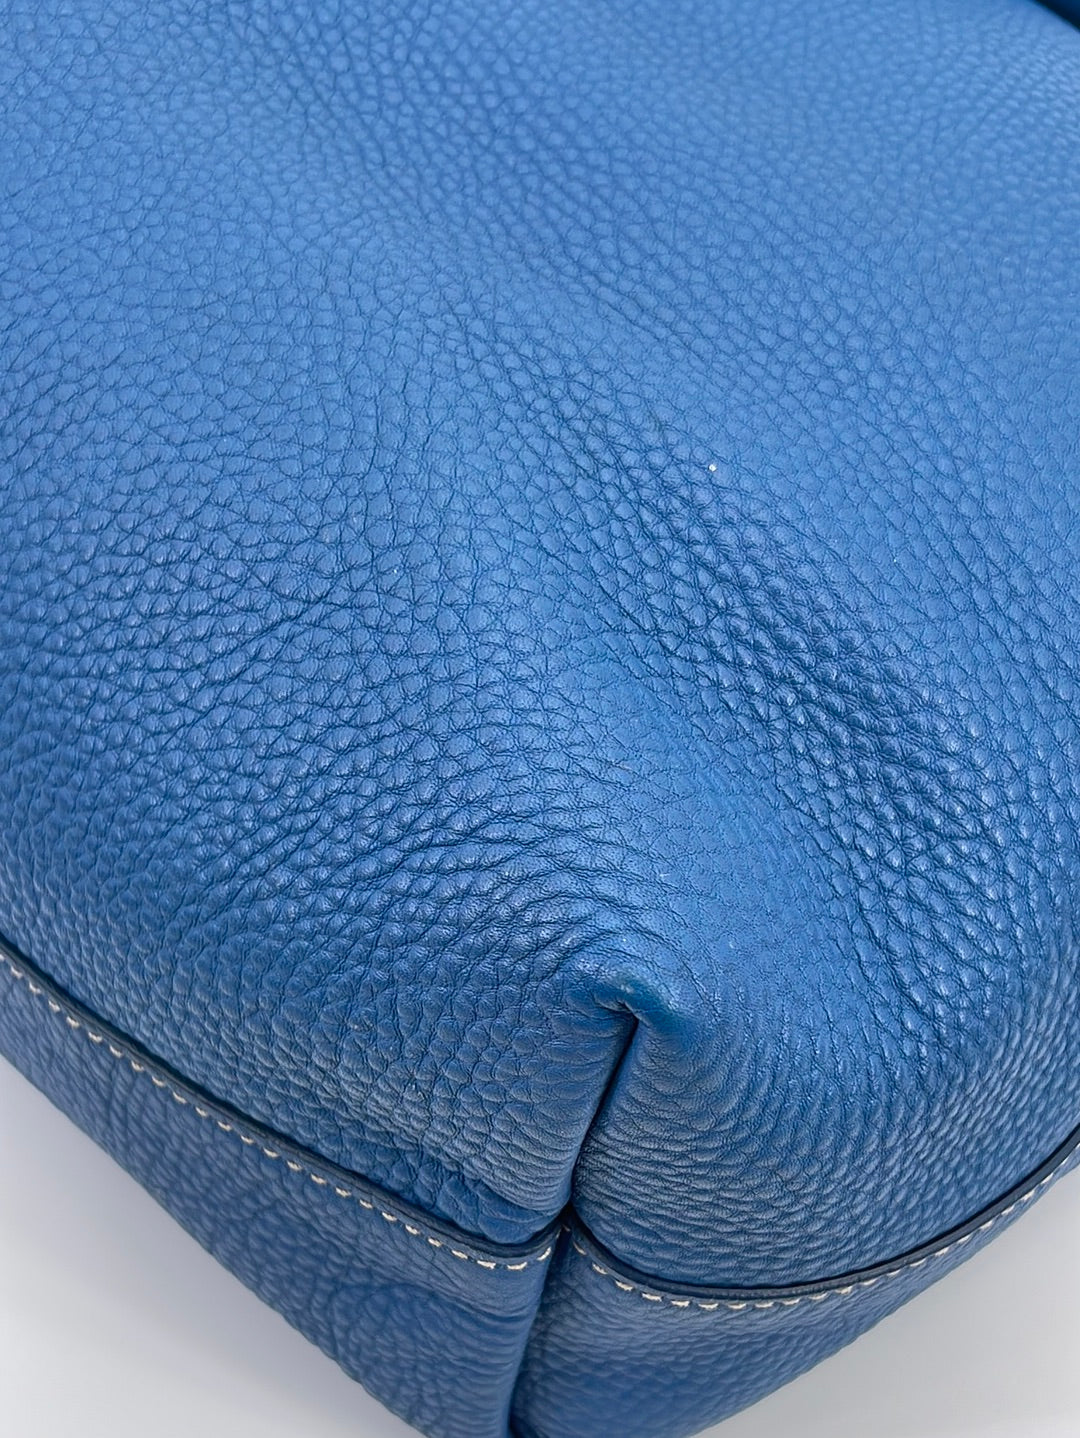 Prada Bluette Vitello Daino Leather Side-Pocket Tote Bag BN2435 - Yoogi's  Closet